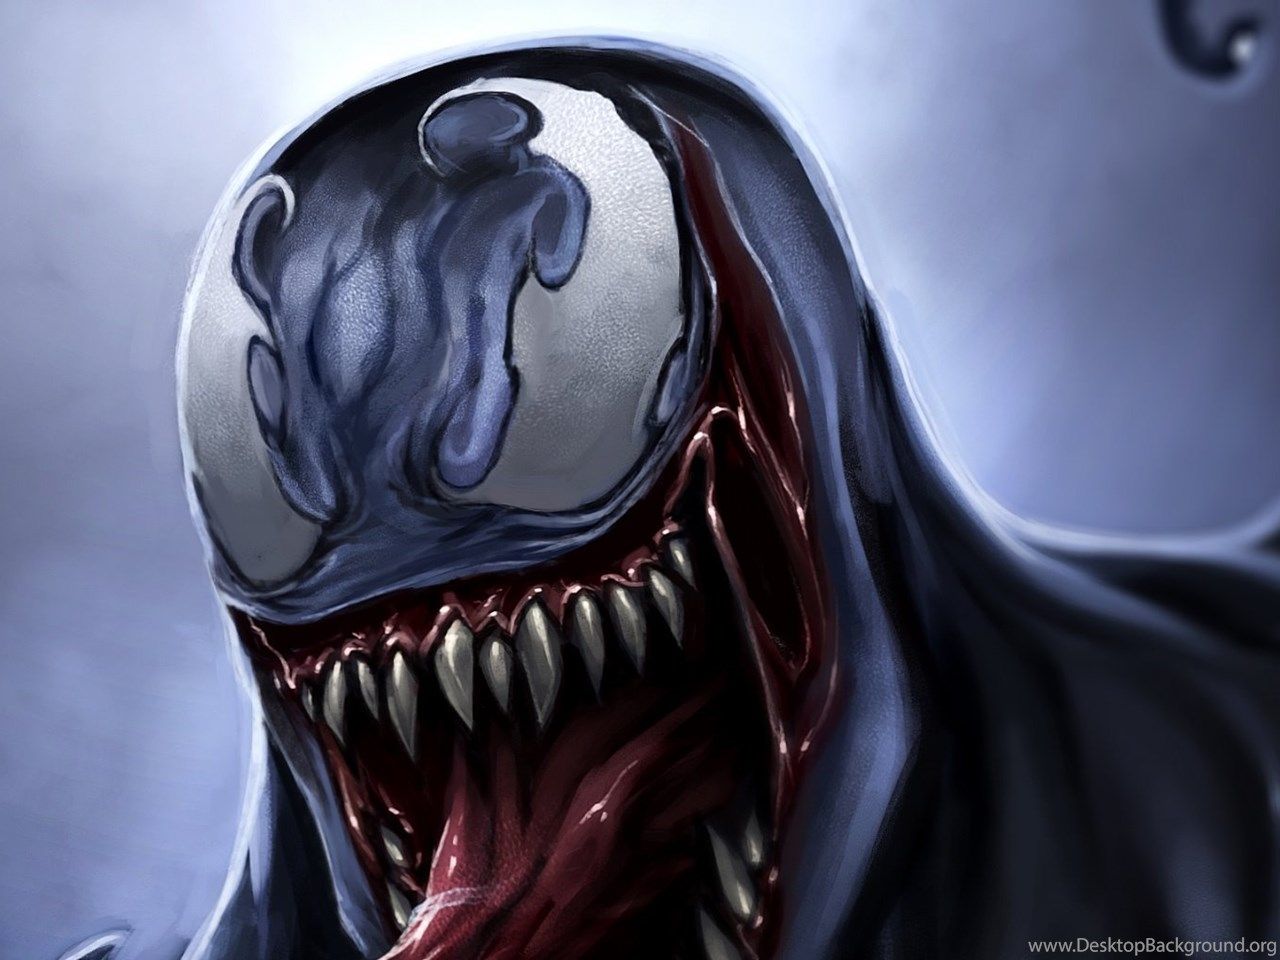 Download Wallpaper 2560x1024 Venom, Eddie Brock, Art, Monster. Desktop Background